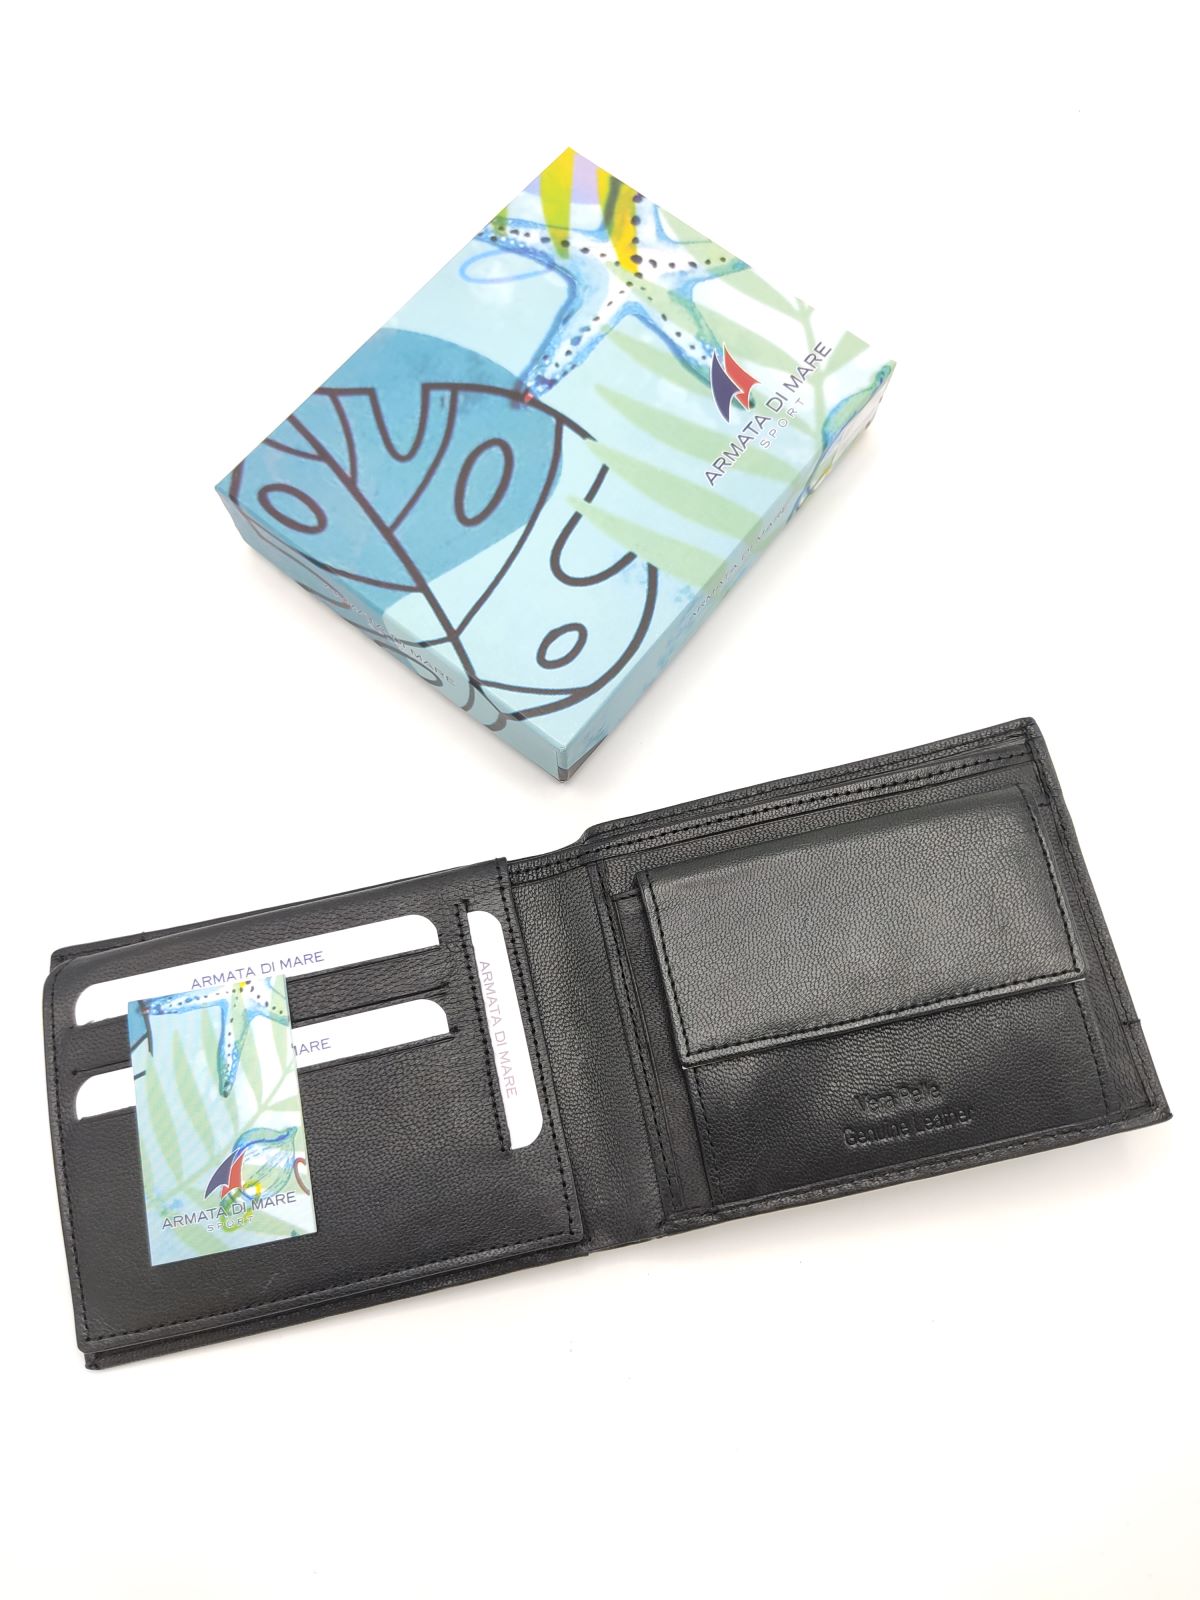 Genuine leather wallet for men, Brand Armata di Mare, art. PDK084-1